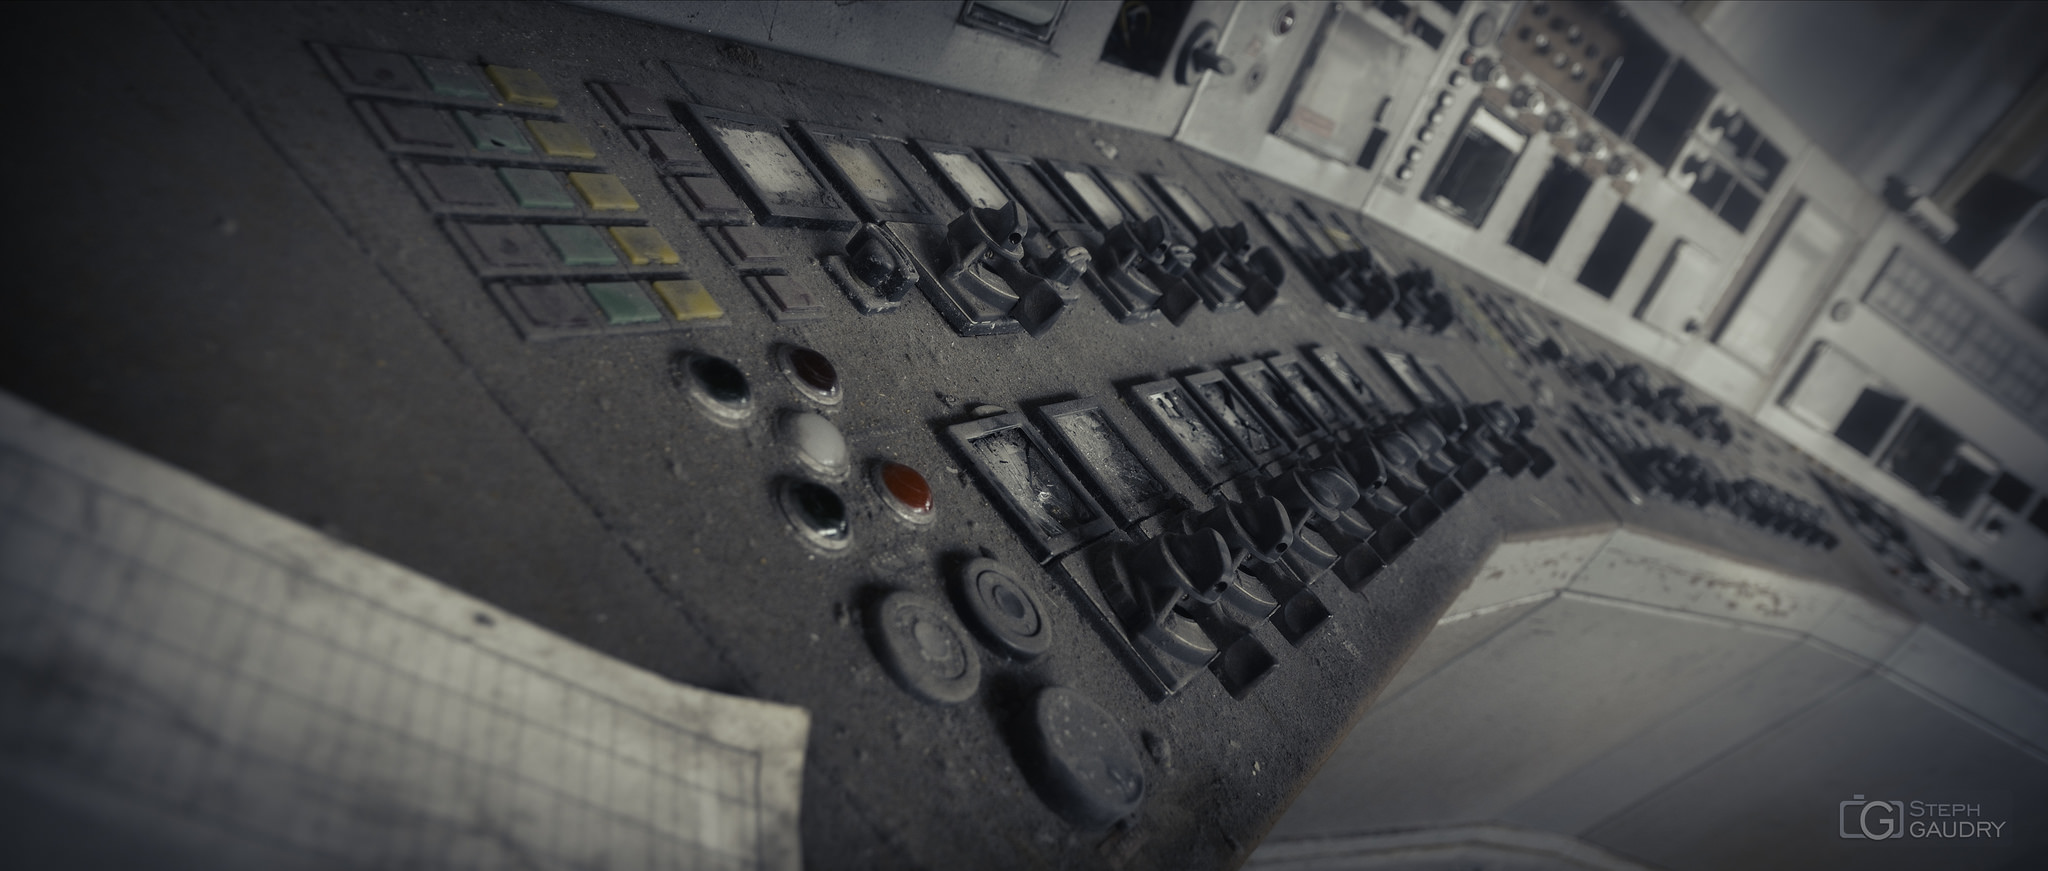 ECVB : little grey control room [Click to start slideshow]